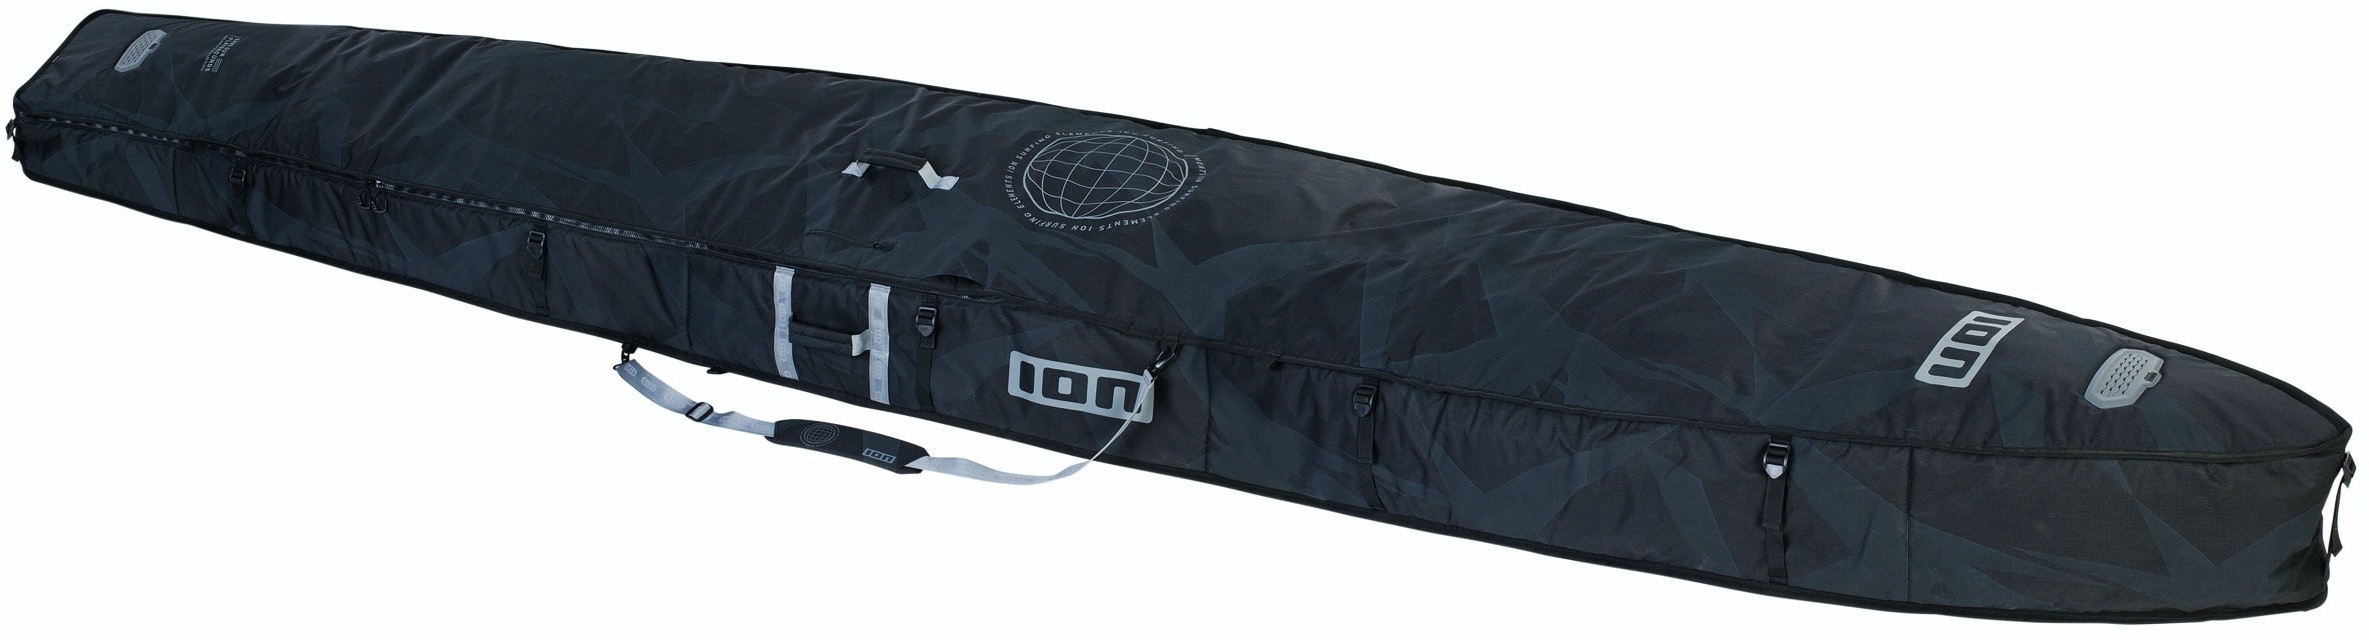 ION SUP Boardbag Race Tec 22 Tasche Boardbag Transport Bag, Breite: 26.5'', Länge: 14'0'', Farbe: black